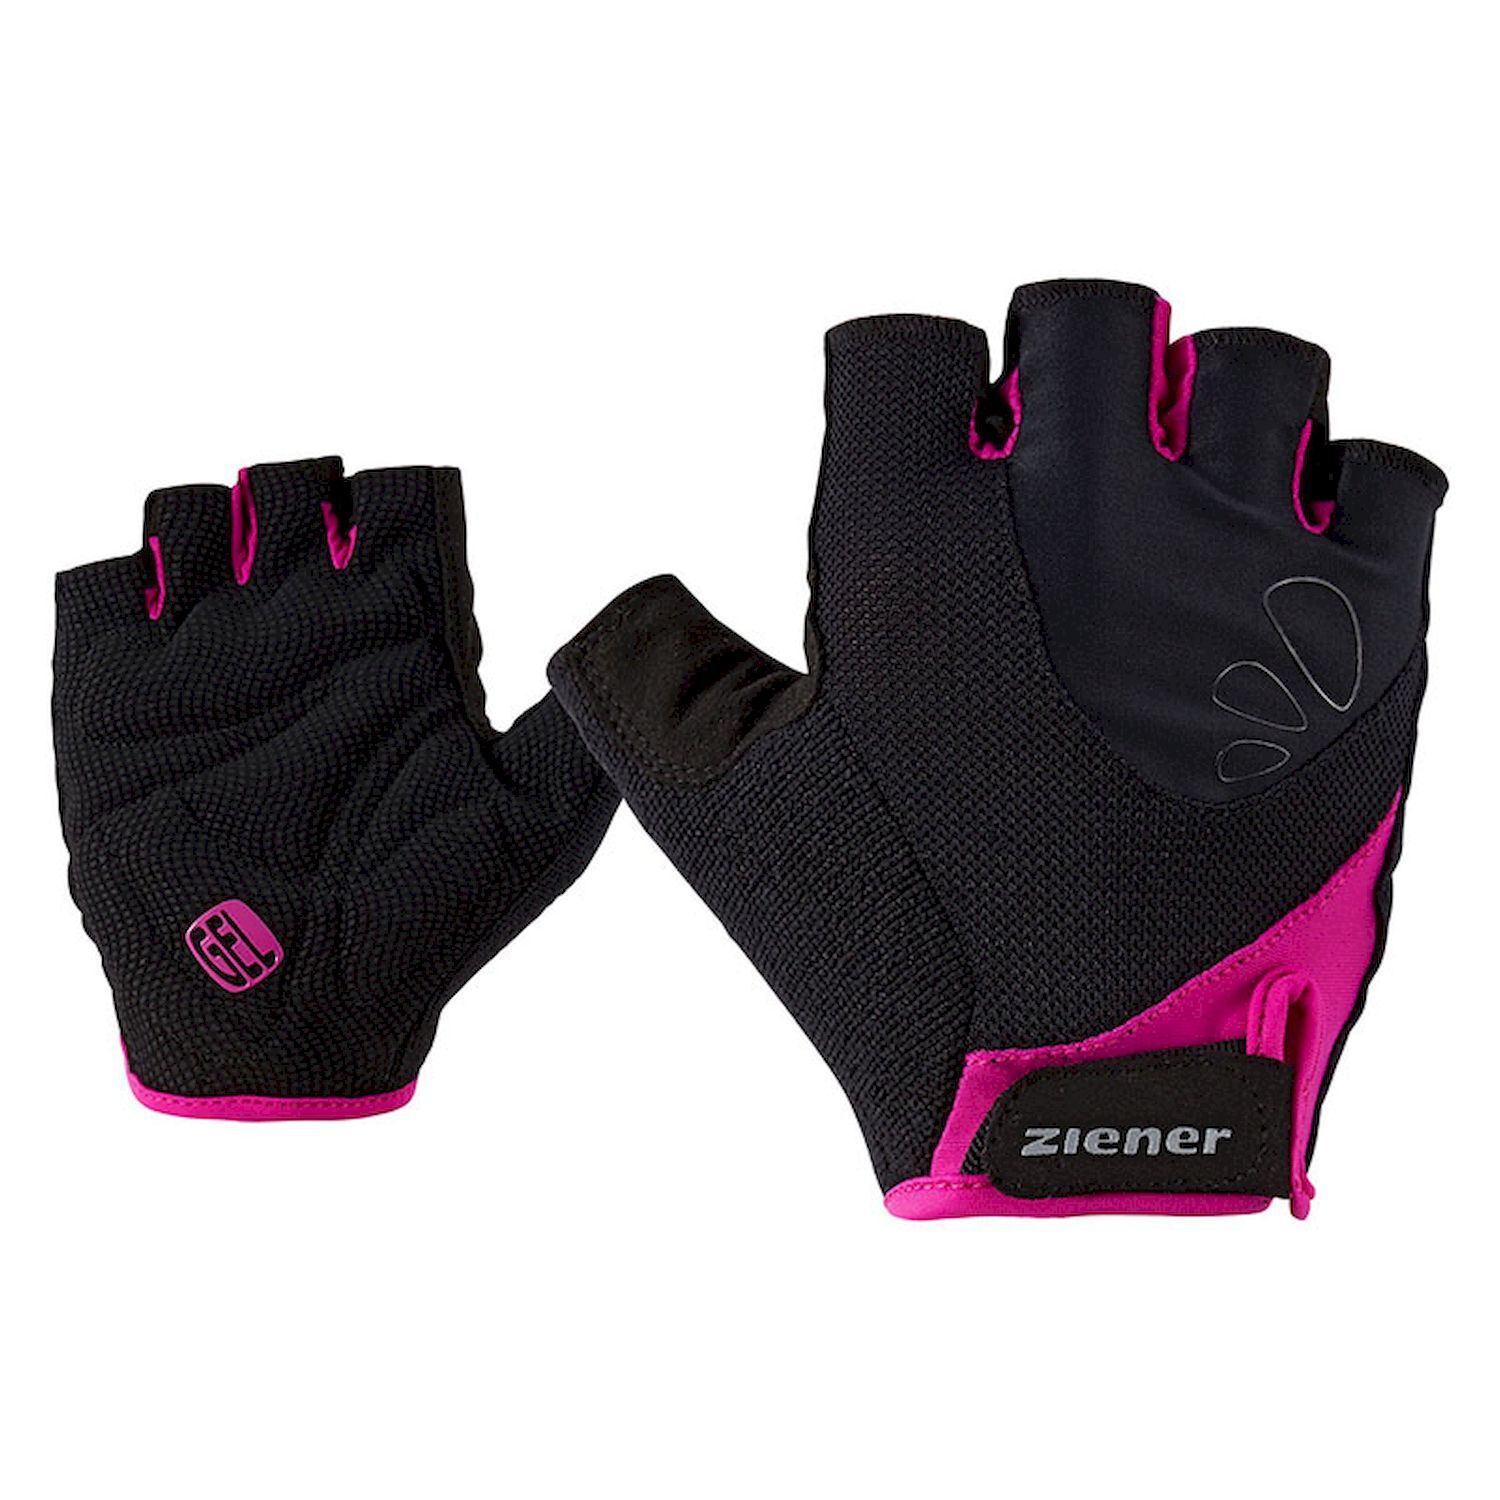 Ziener Capela Lady - Cycling gloves - Women's